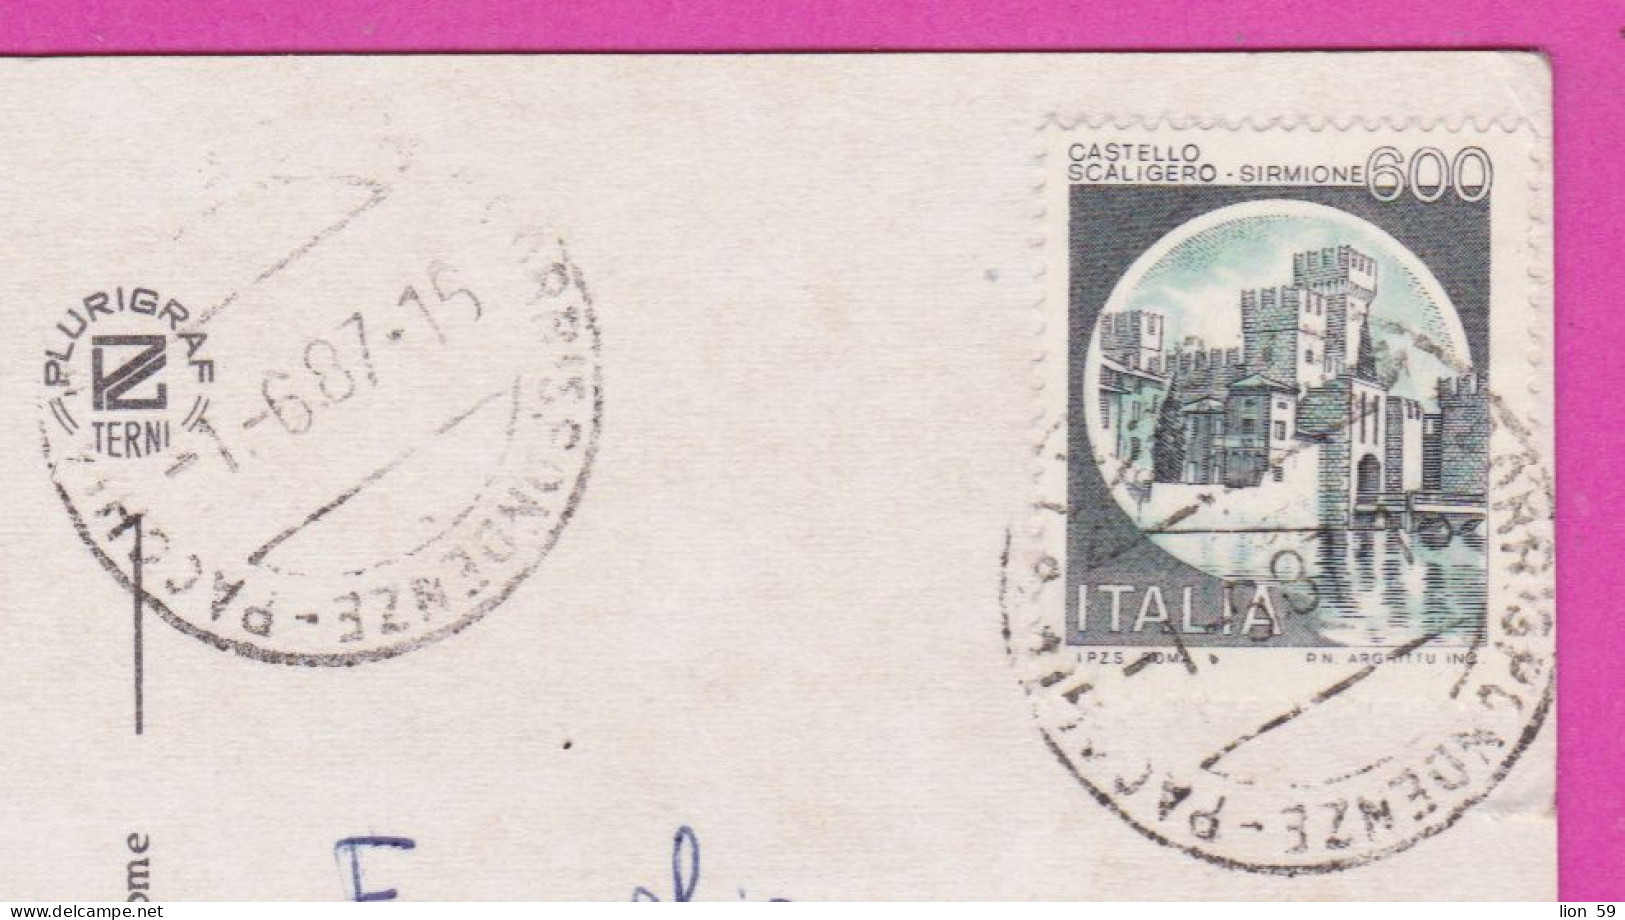 293885 / Italy - Macerata 5 View Panorama PC 1987 USED 600 L Castello Scaligero Di Sirmione , Castle Italia Italie - 1981-90: Marcophilie